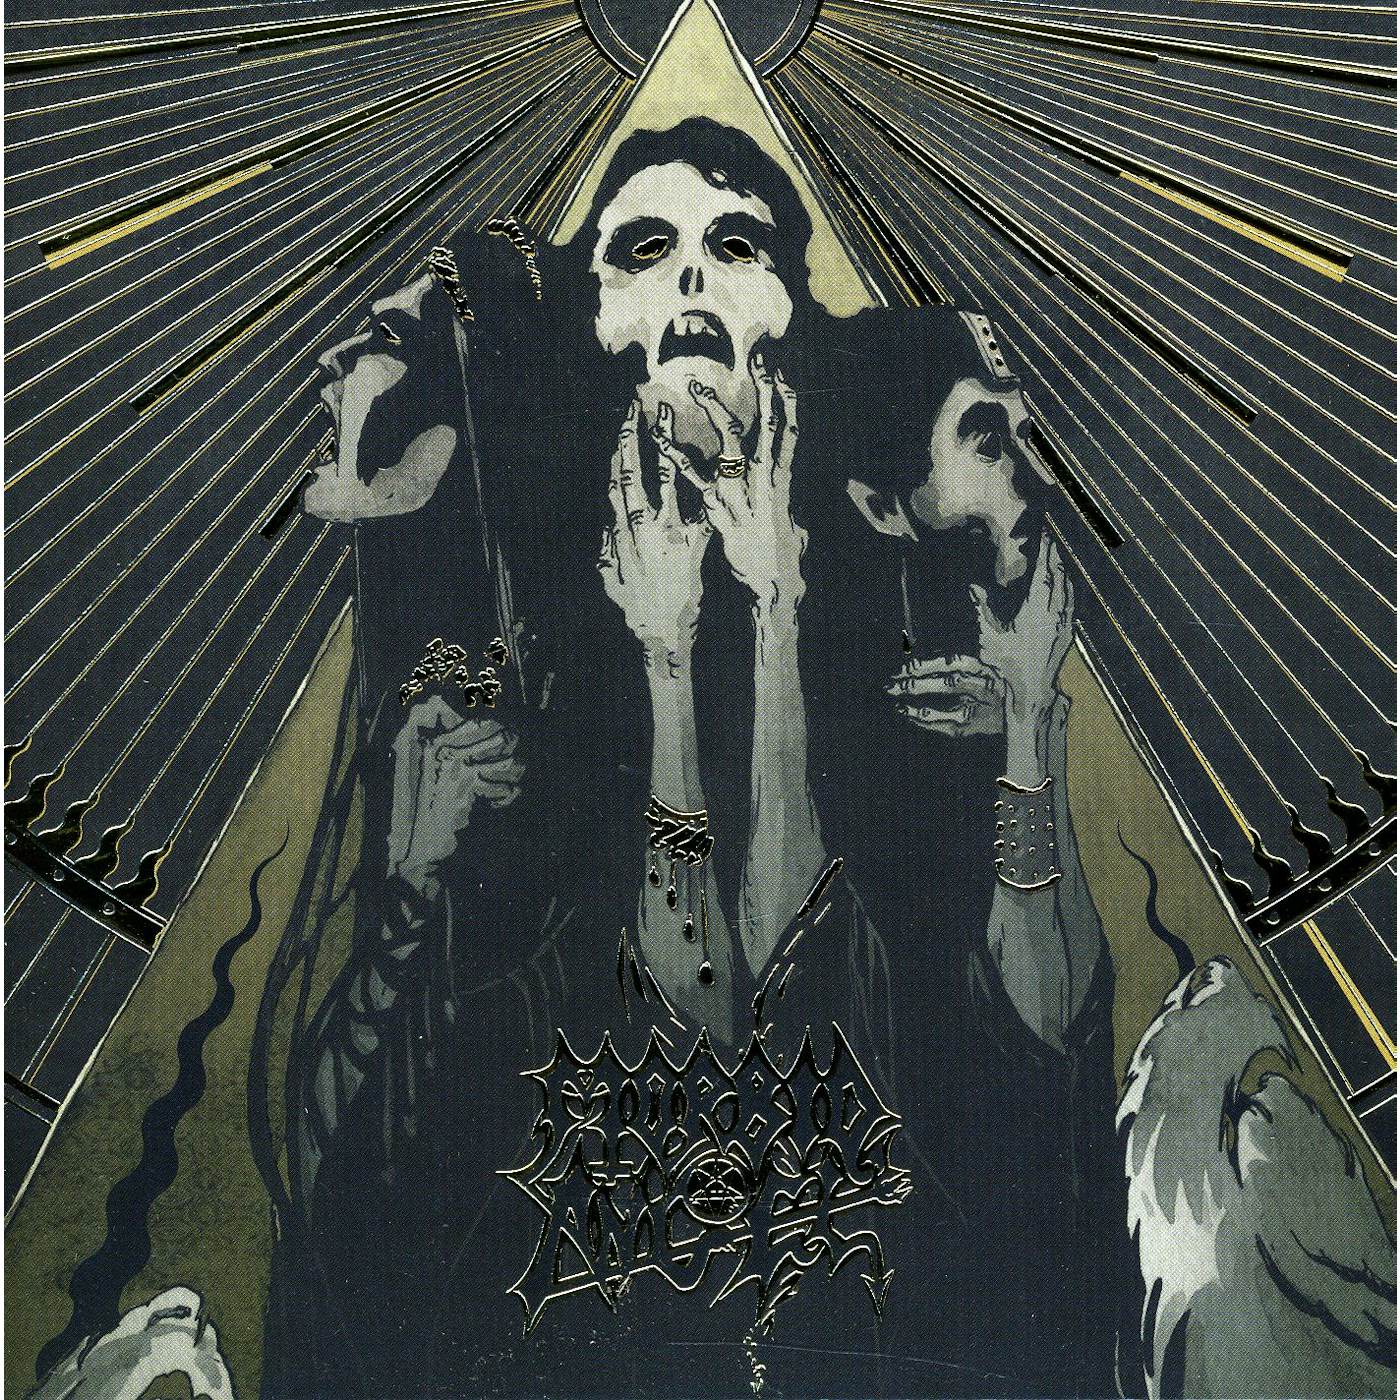 Morbid Angel Nevermore Vinyl Record